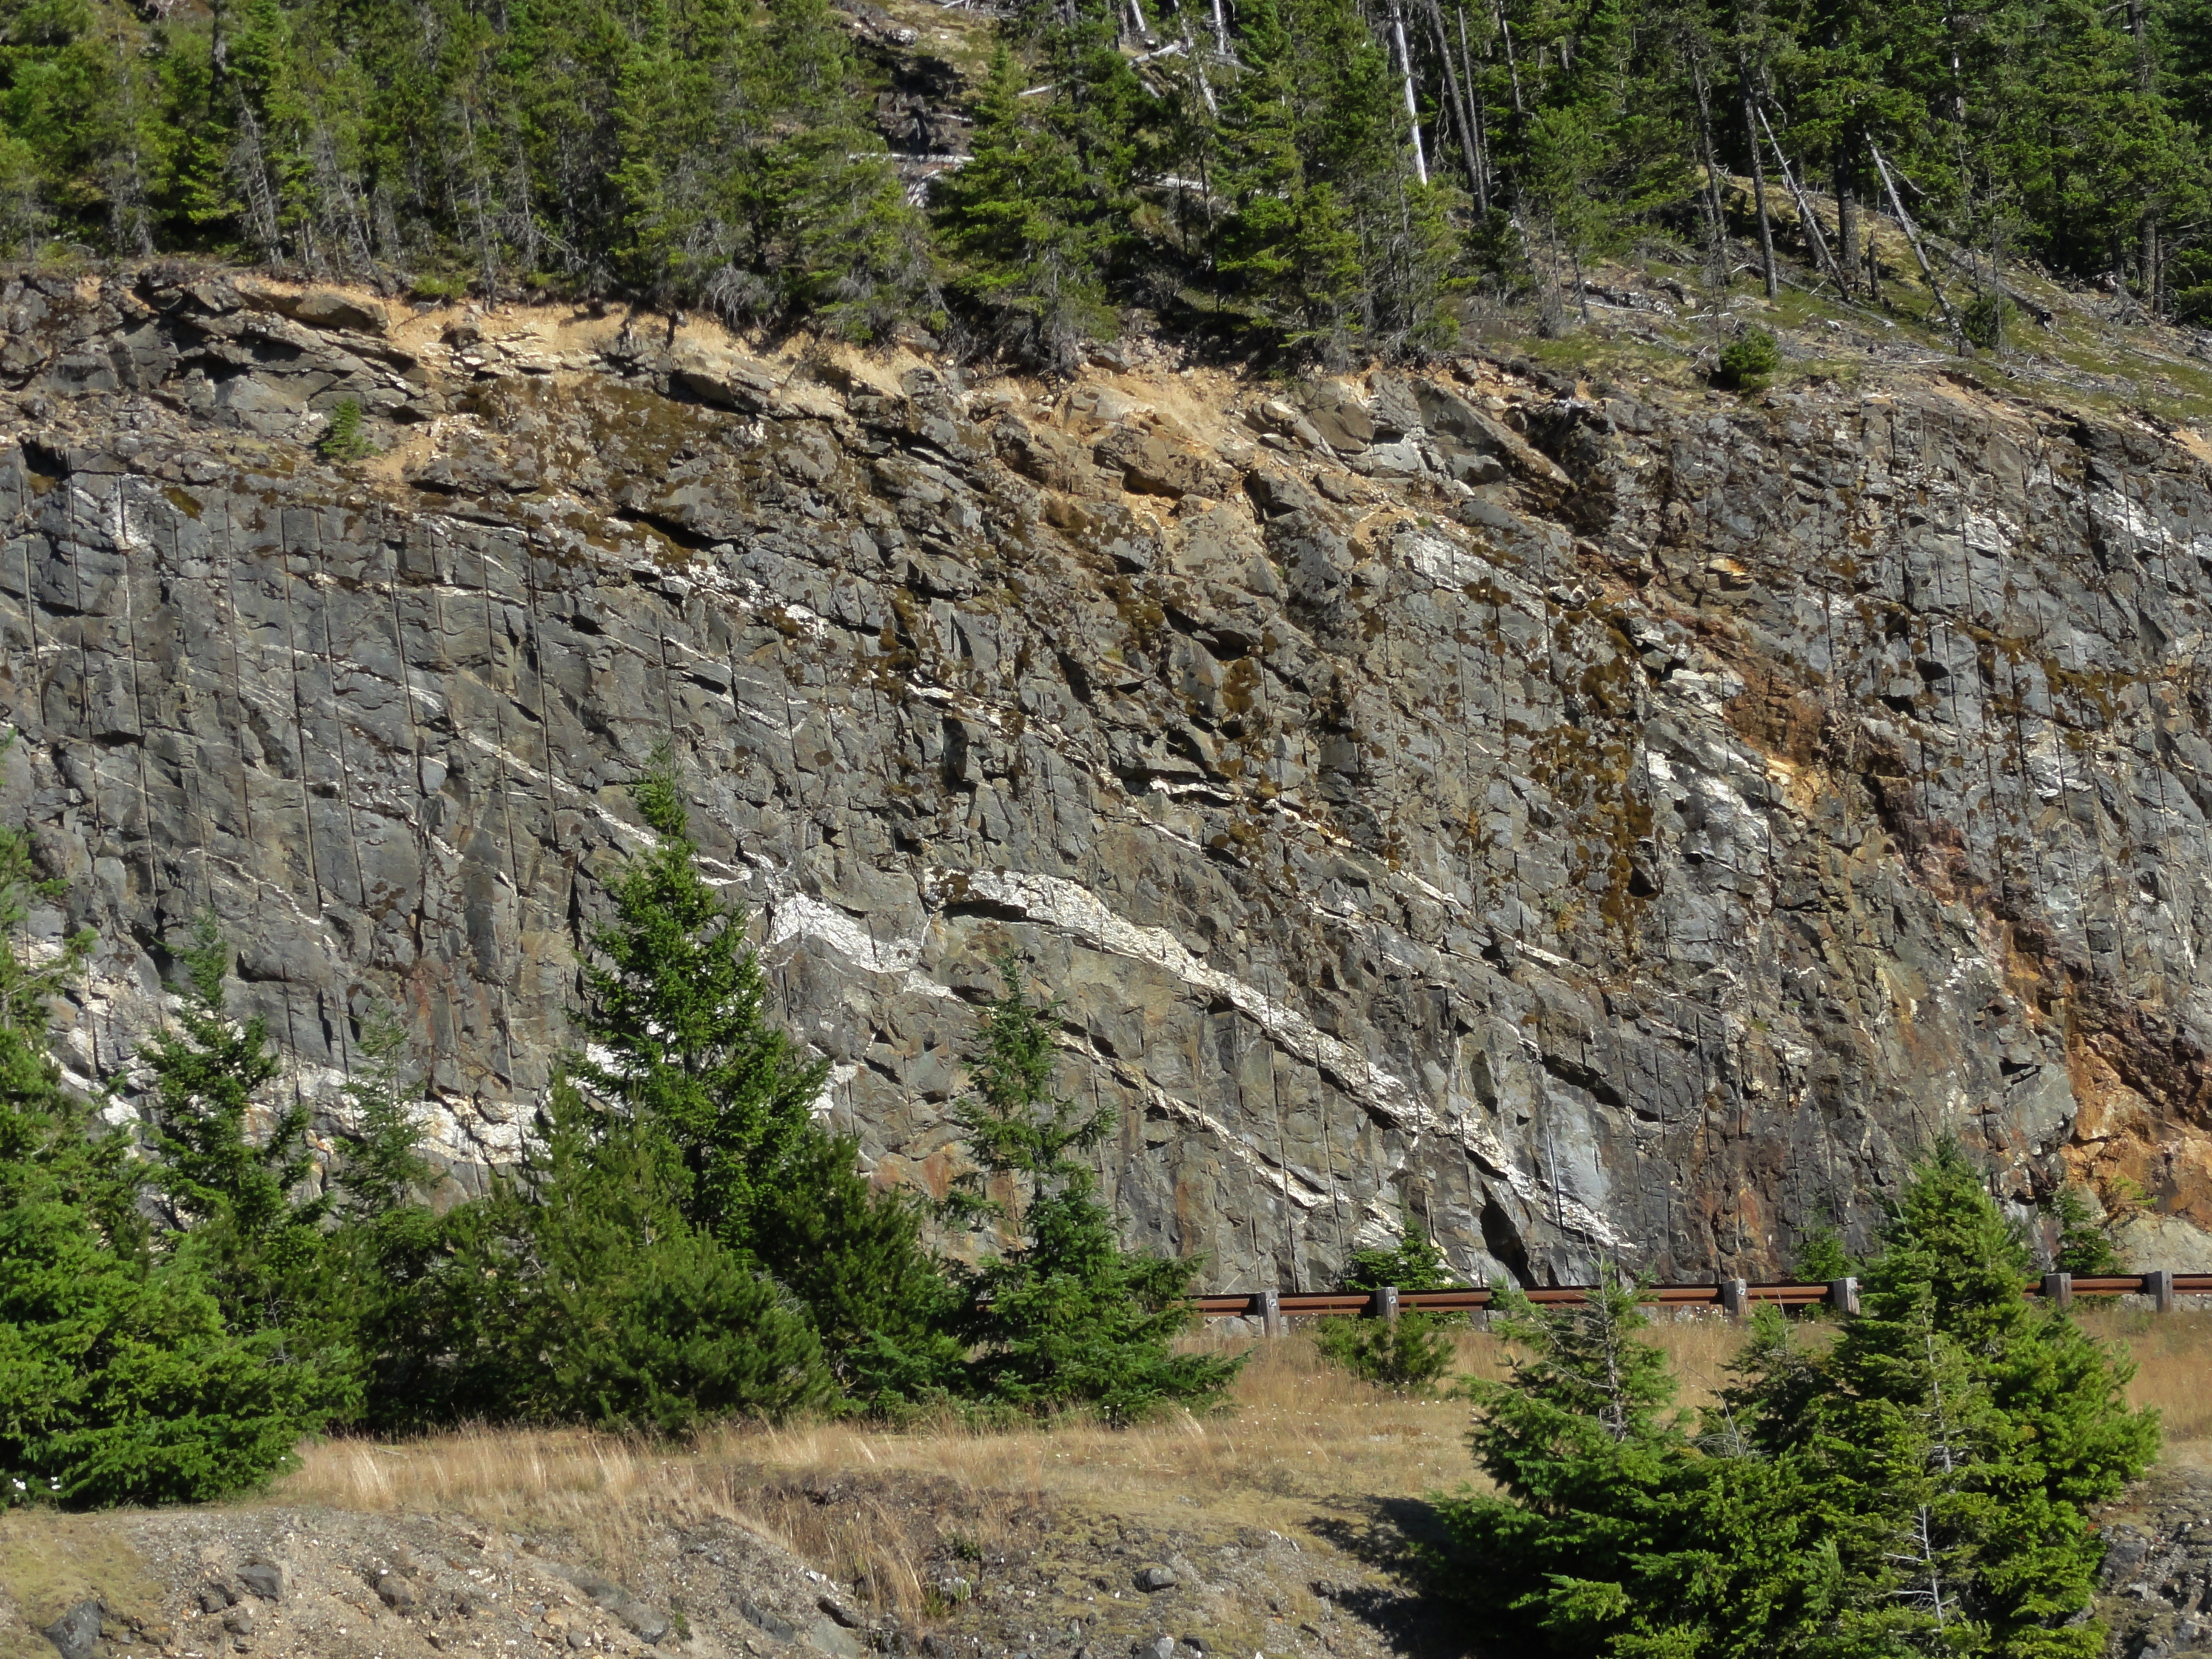 Roadcut through Skagit Gneiss. White streaks are granitic pegmatite dikes.